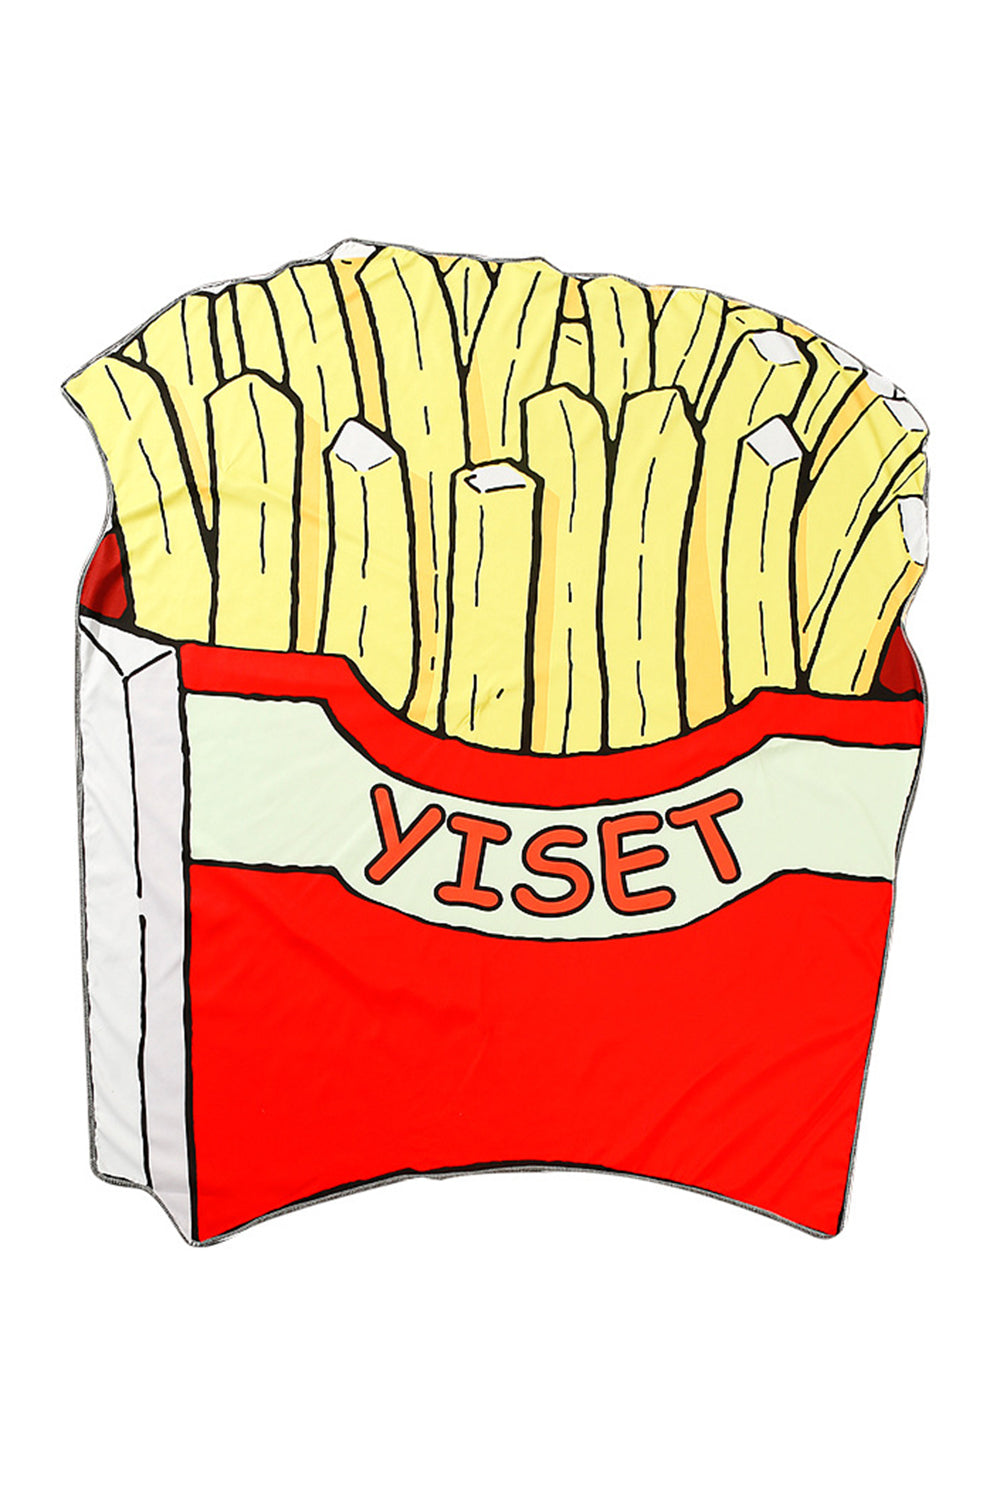 Iyasson Cute Chips Print Irregular figure Beach Blanket